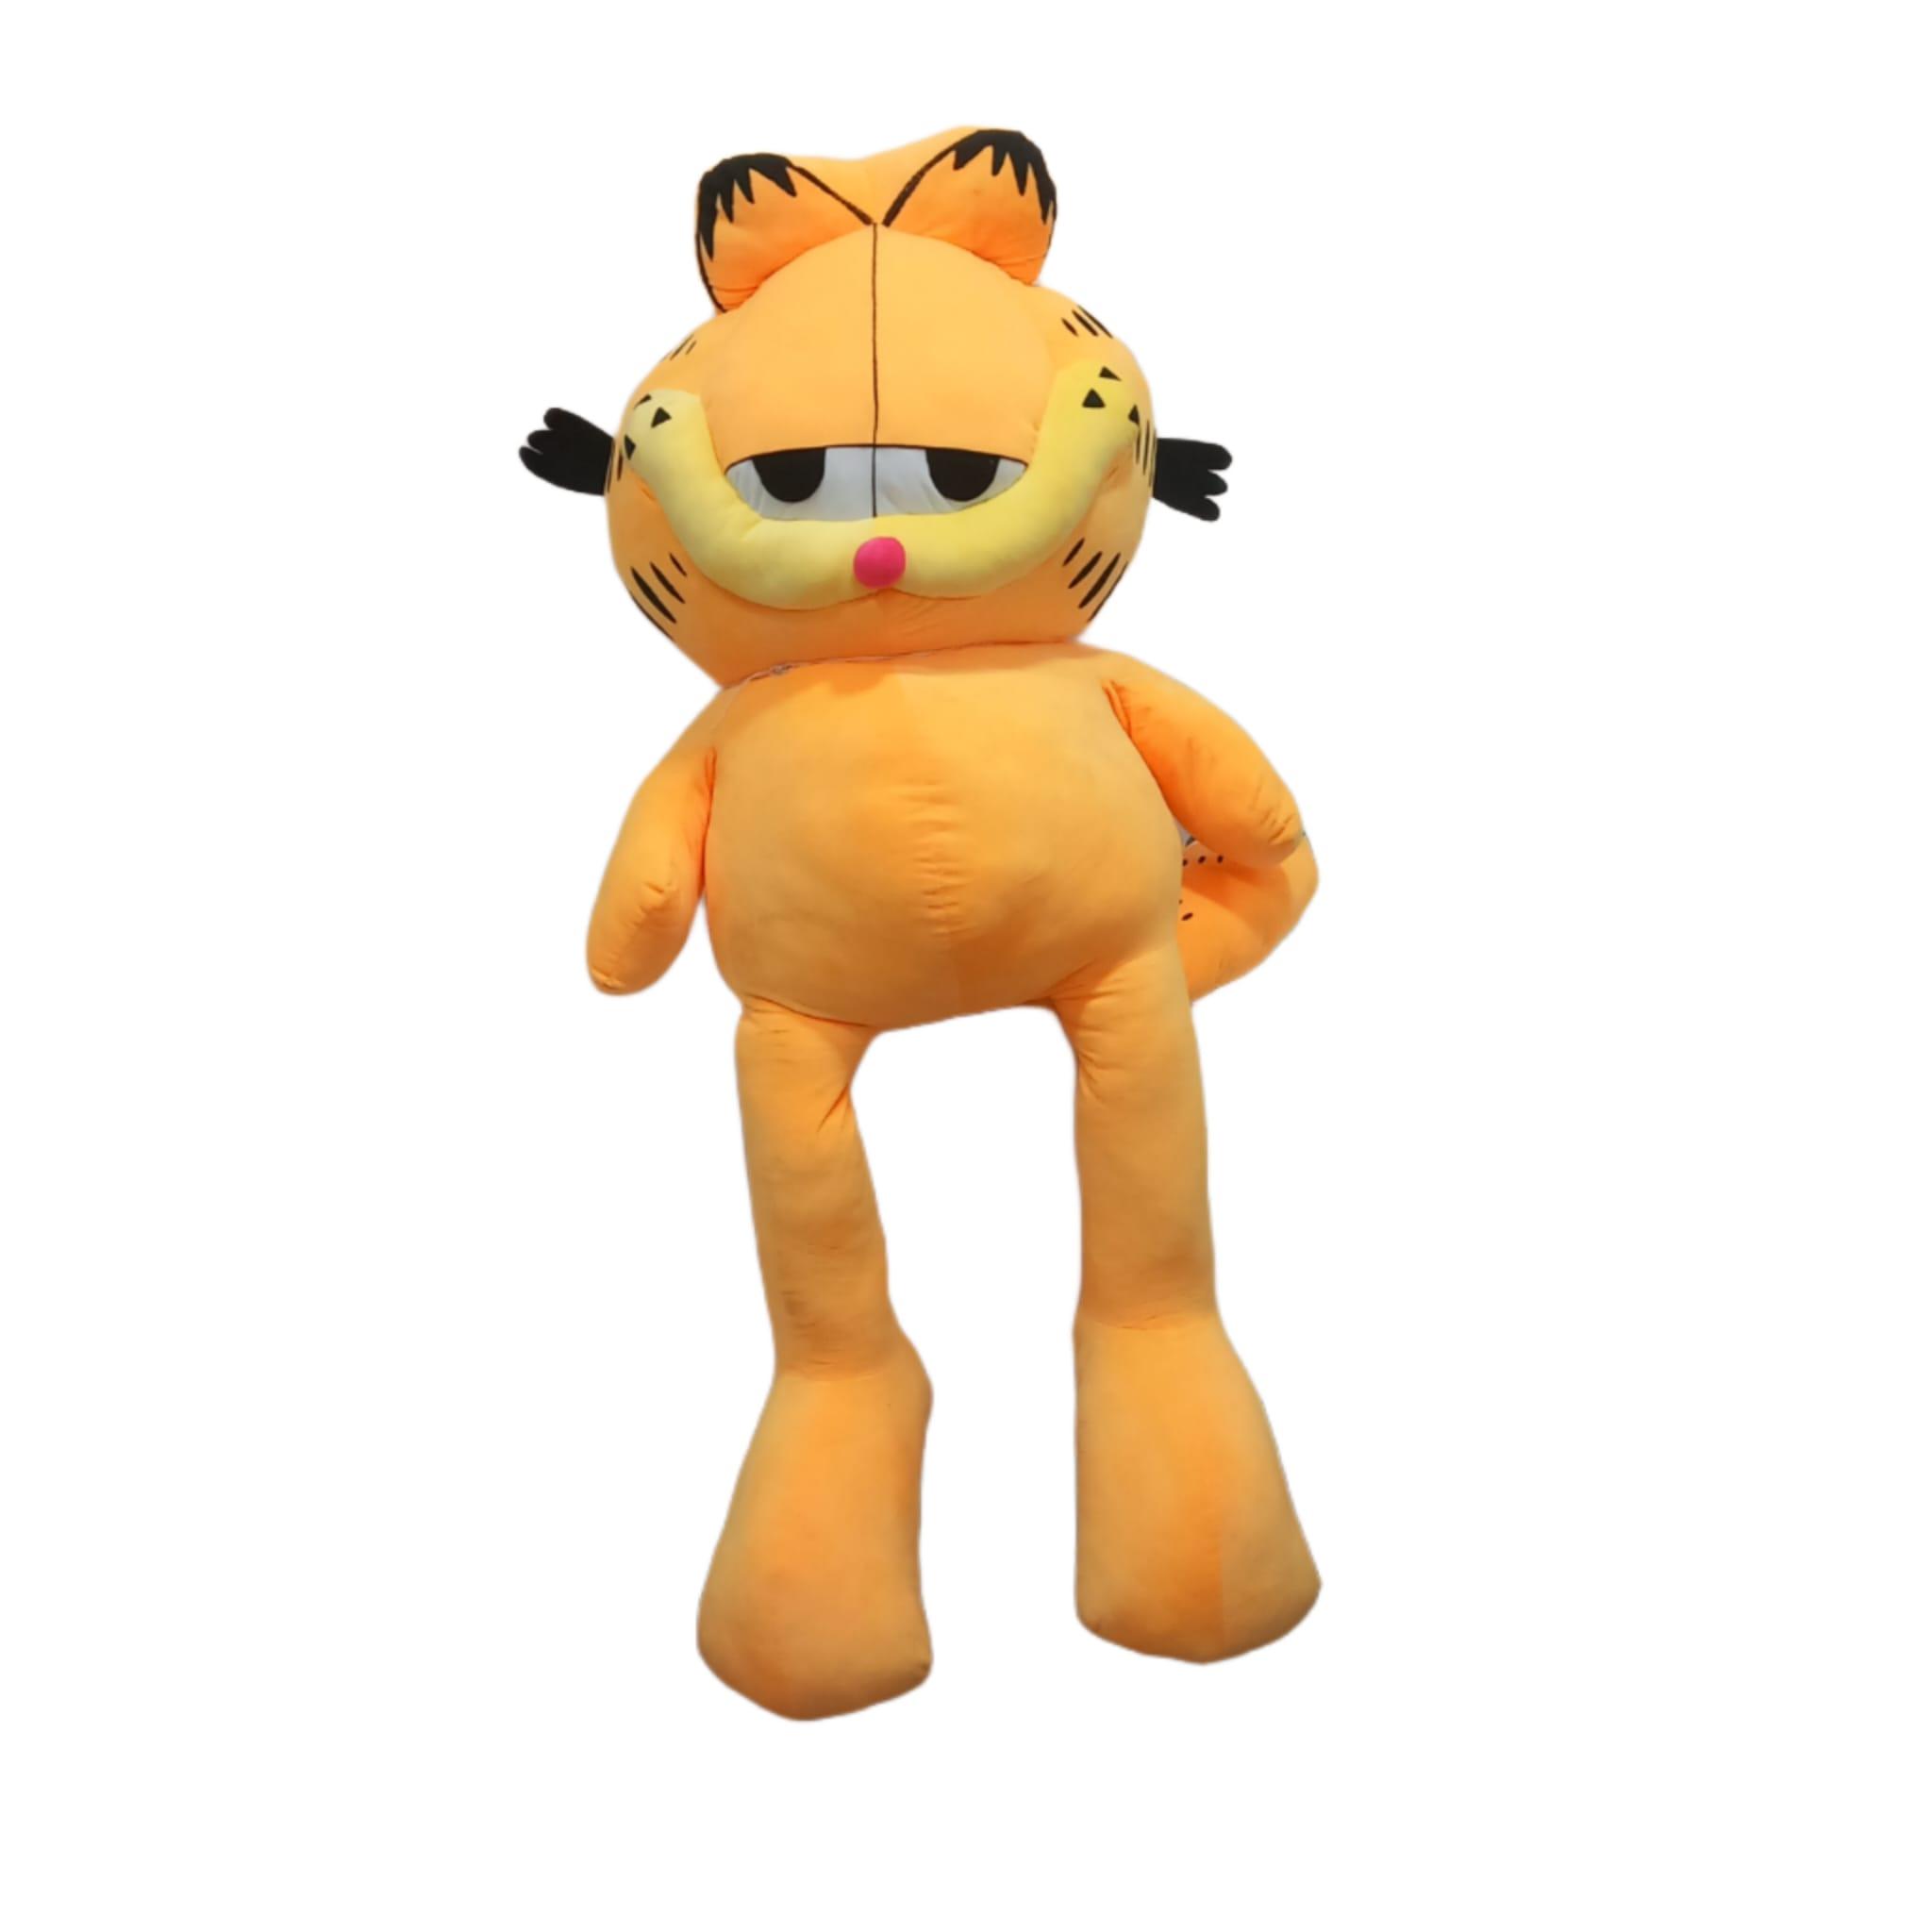 Garfield maxi